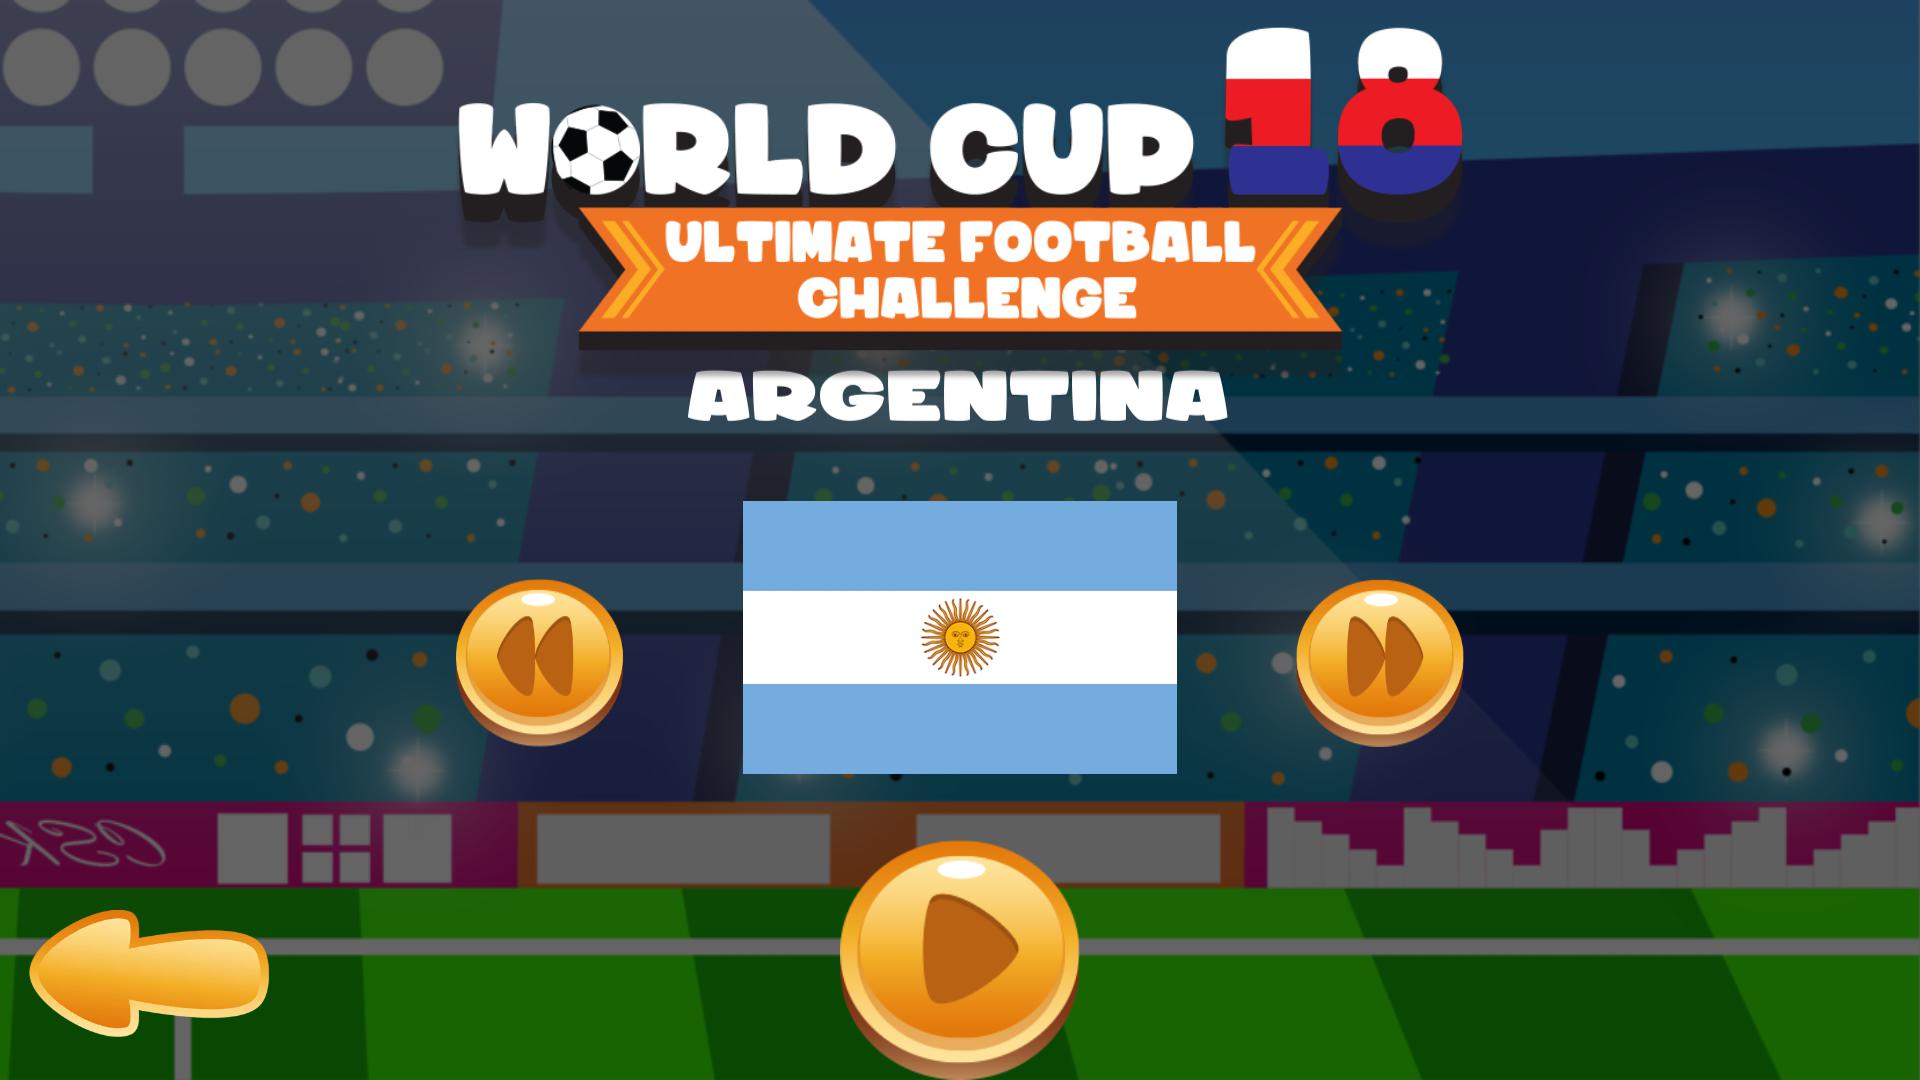 World cup 2018: Ultimate Football Challenge_截图_3